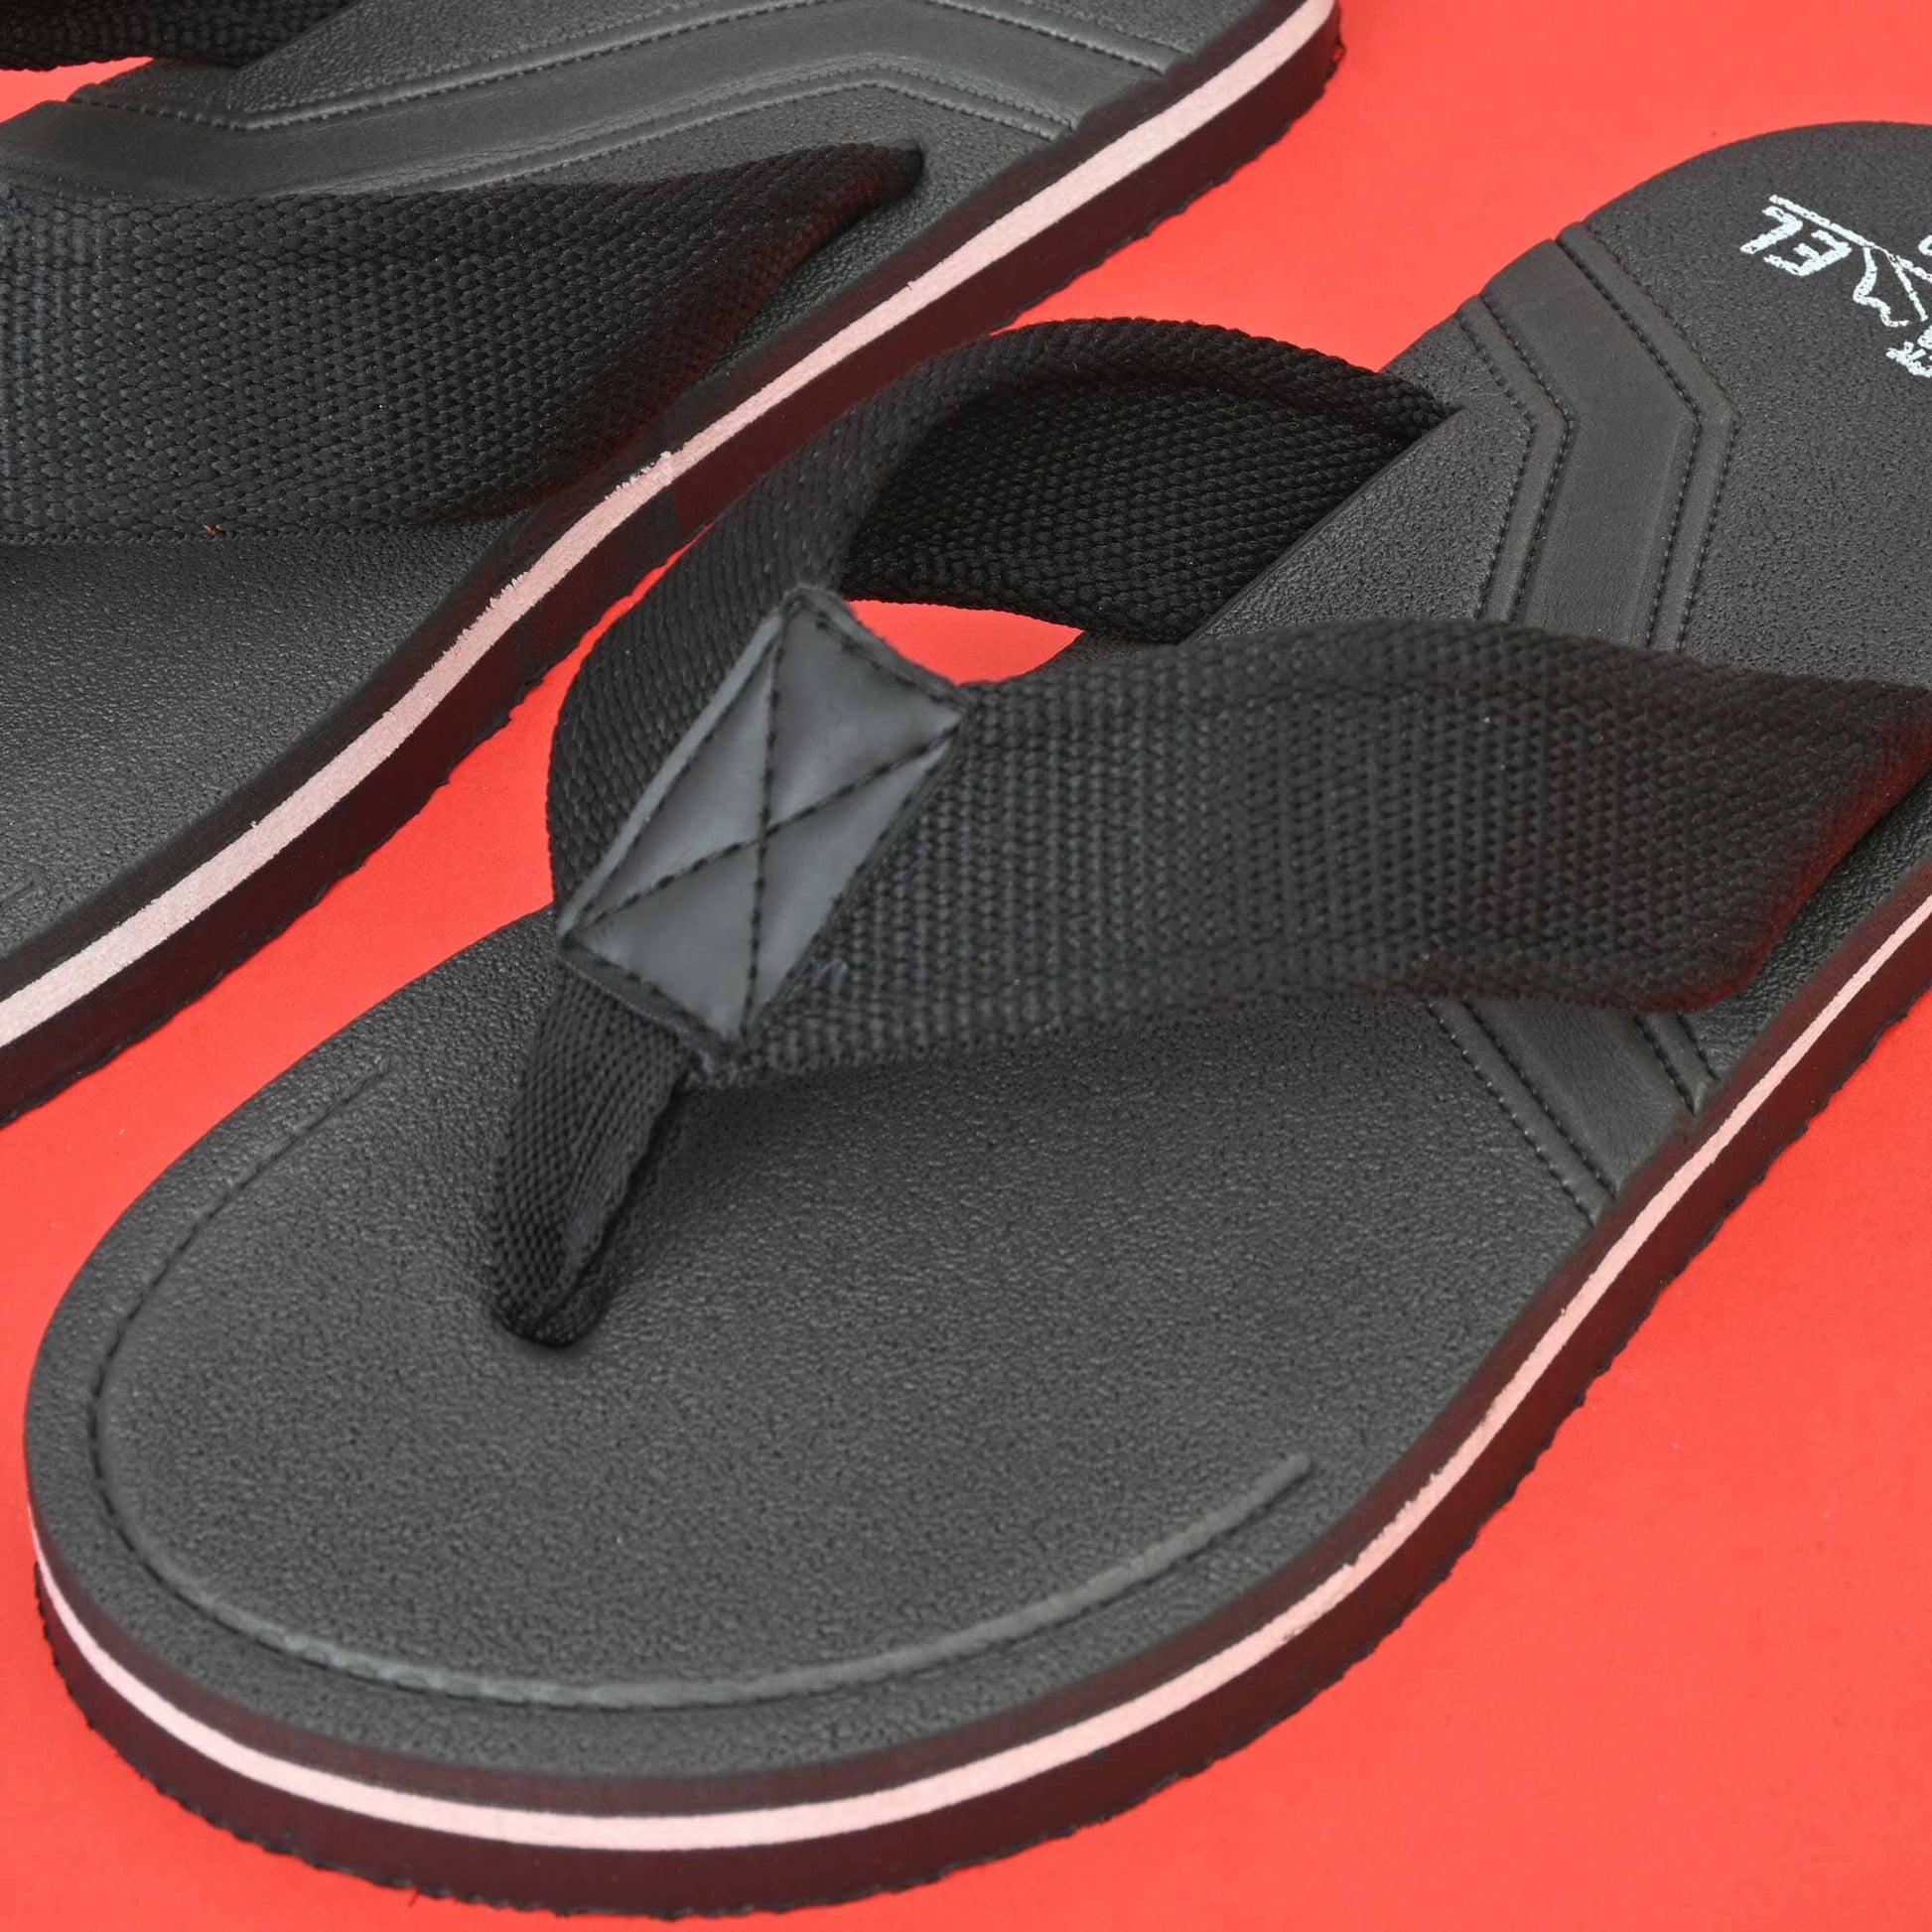 Black Camel Men's Ultra-Light Soft Flip Flops Slippers Men's Shoes Hamza Traders 